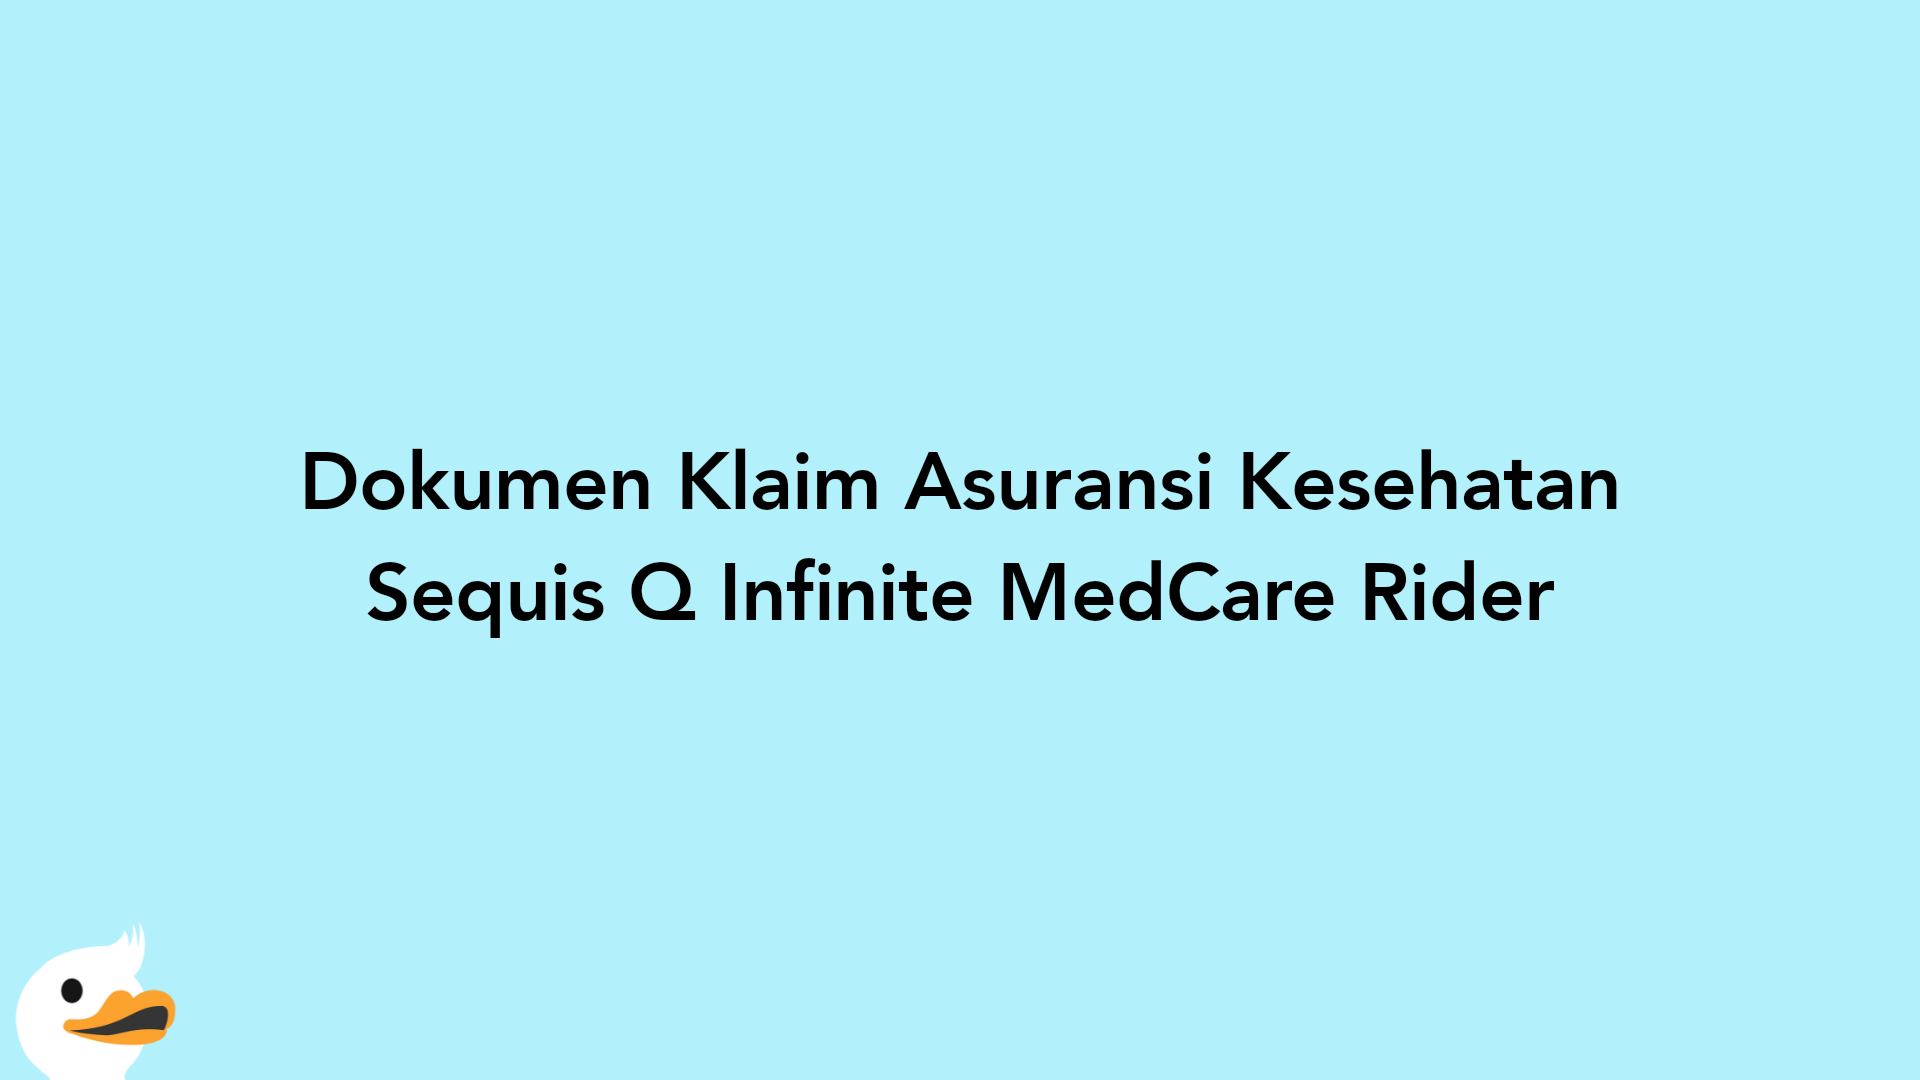 Dokumen Klaim Asuransi Kesehatan Sequis Q Infinite MedCare Rider